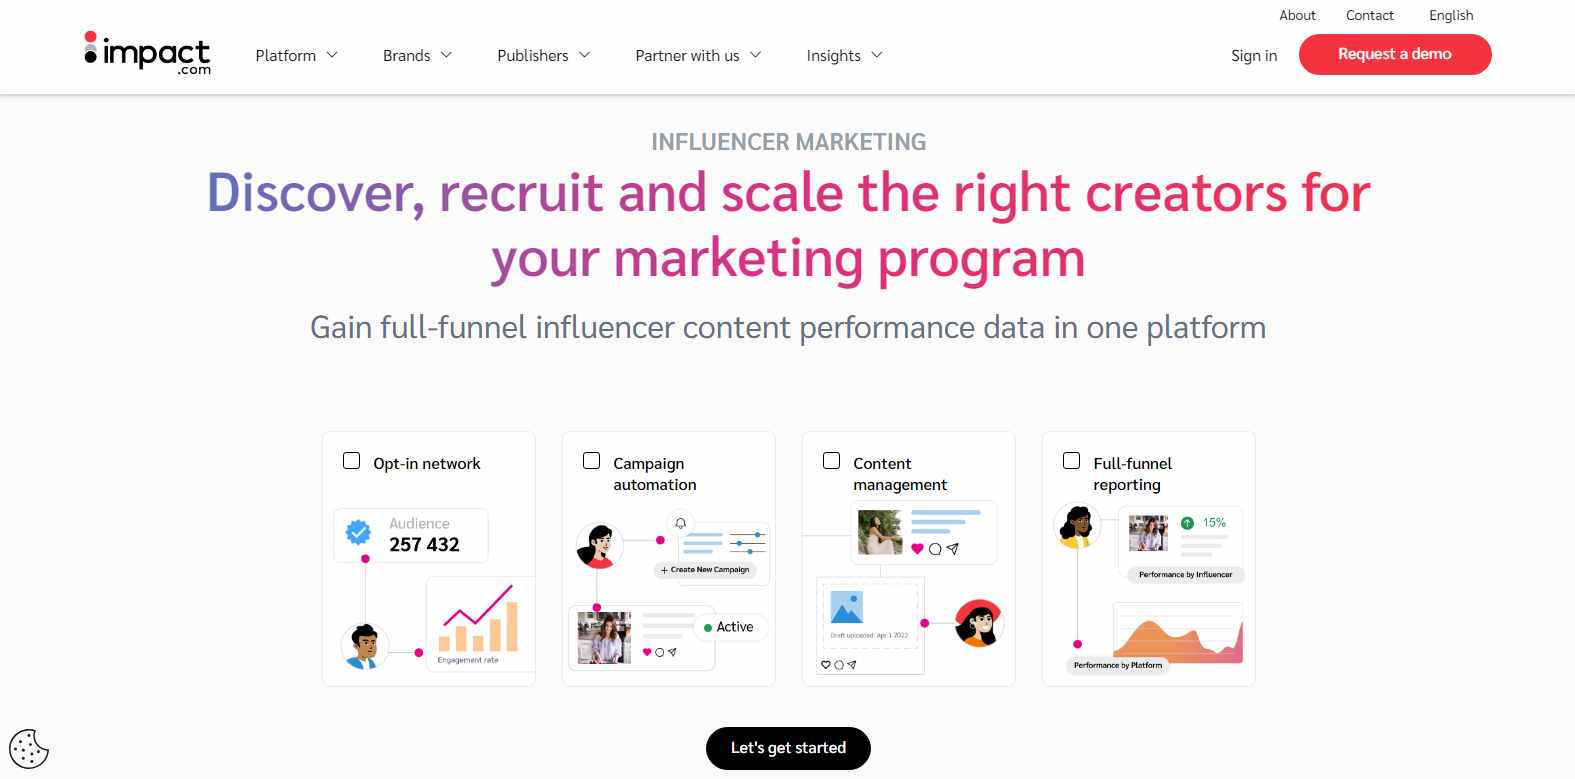 Impact: Influencer Marketing Platform Page